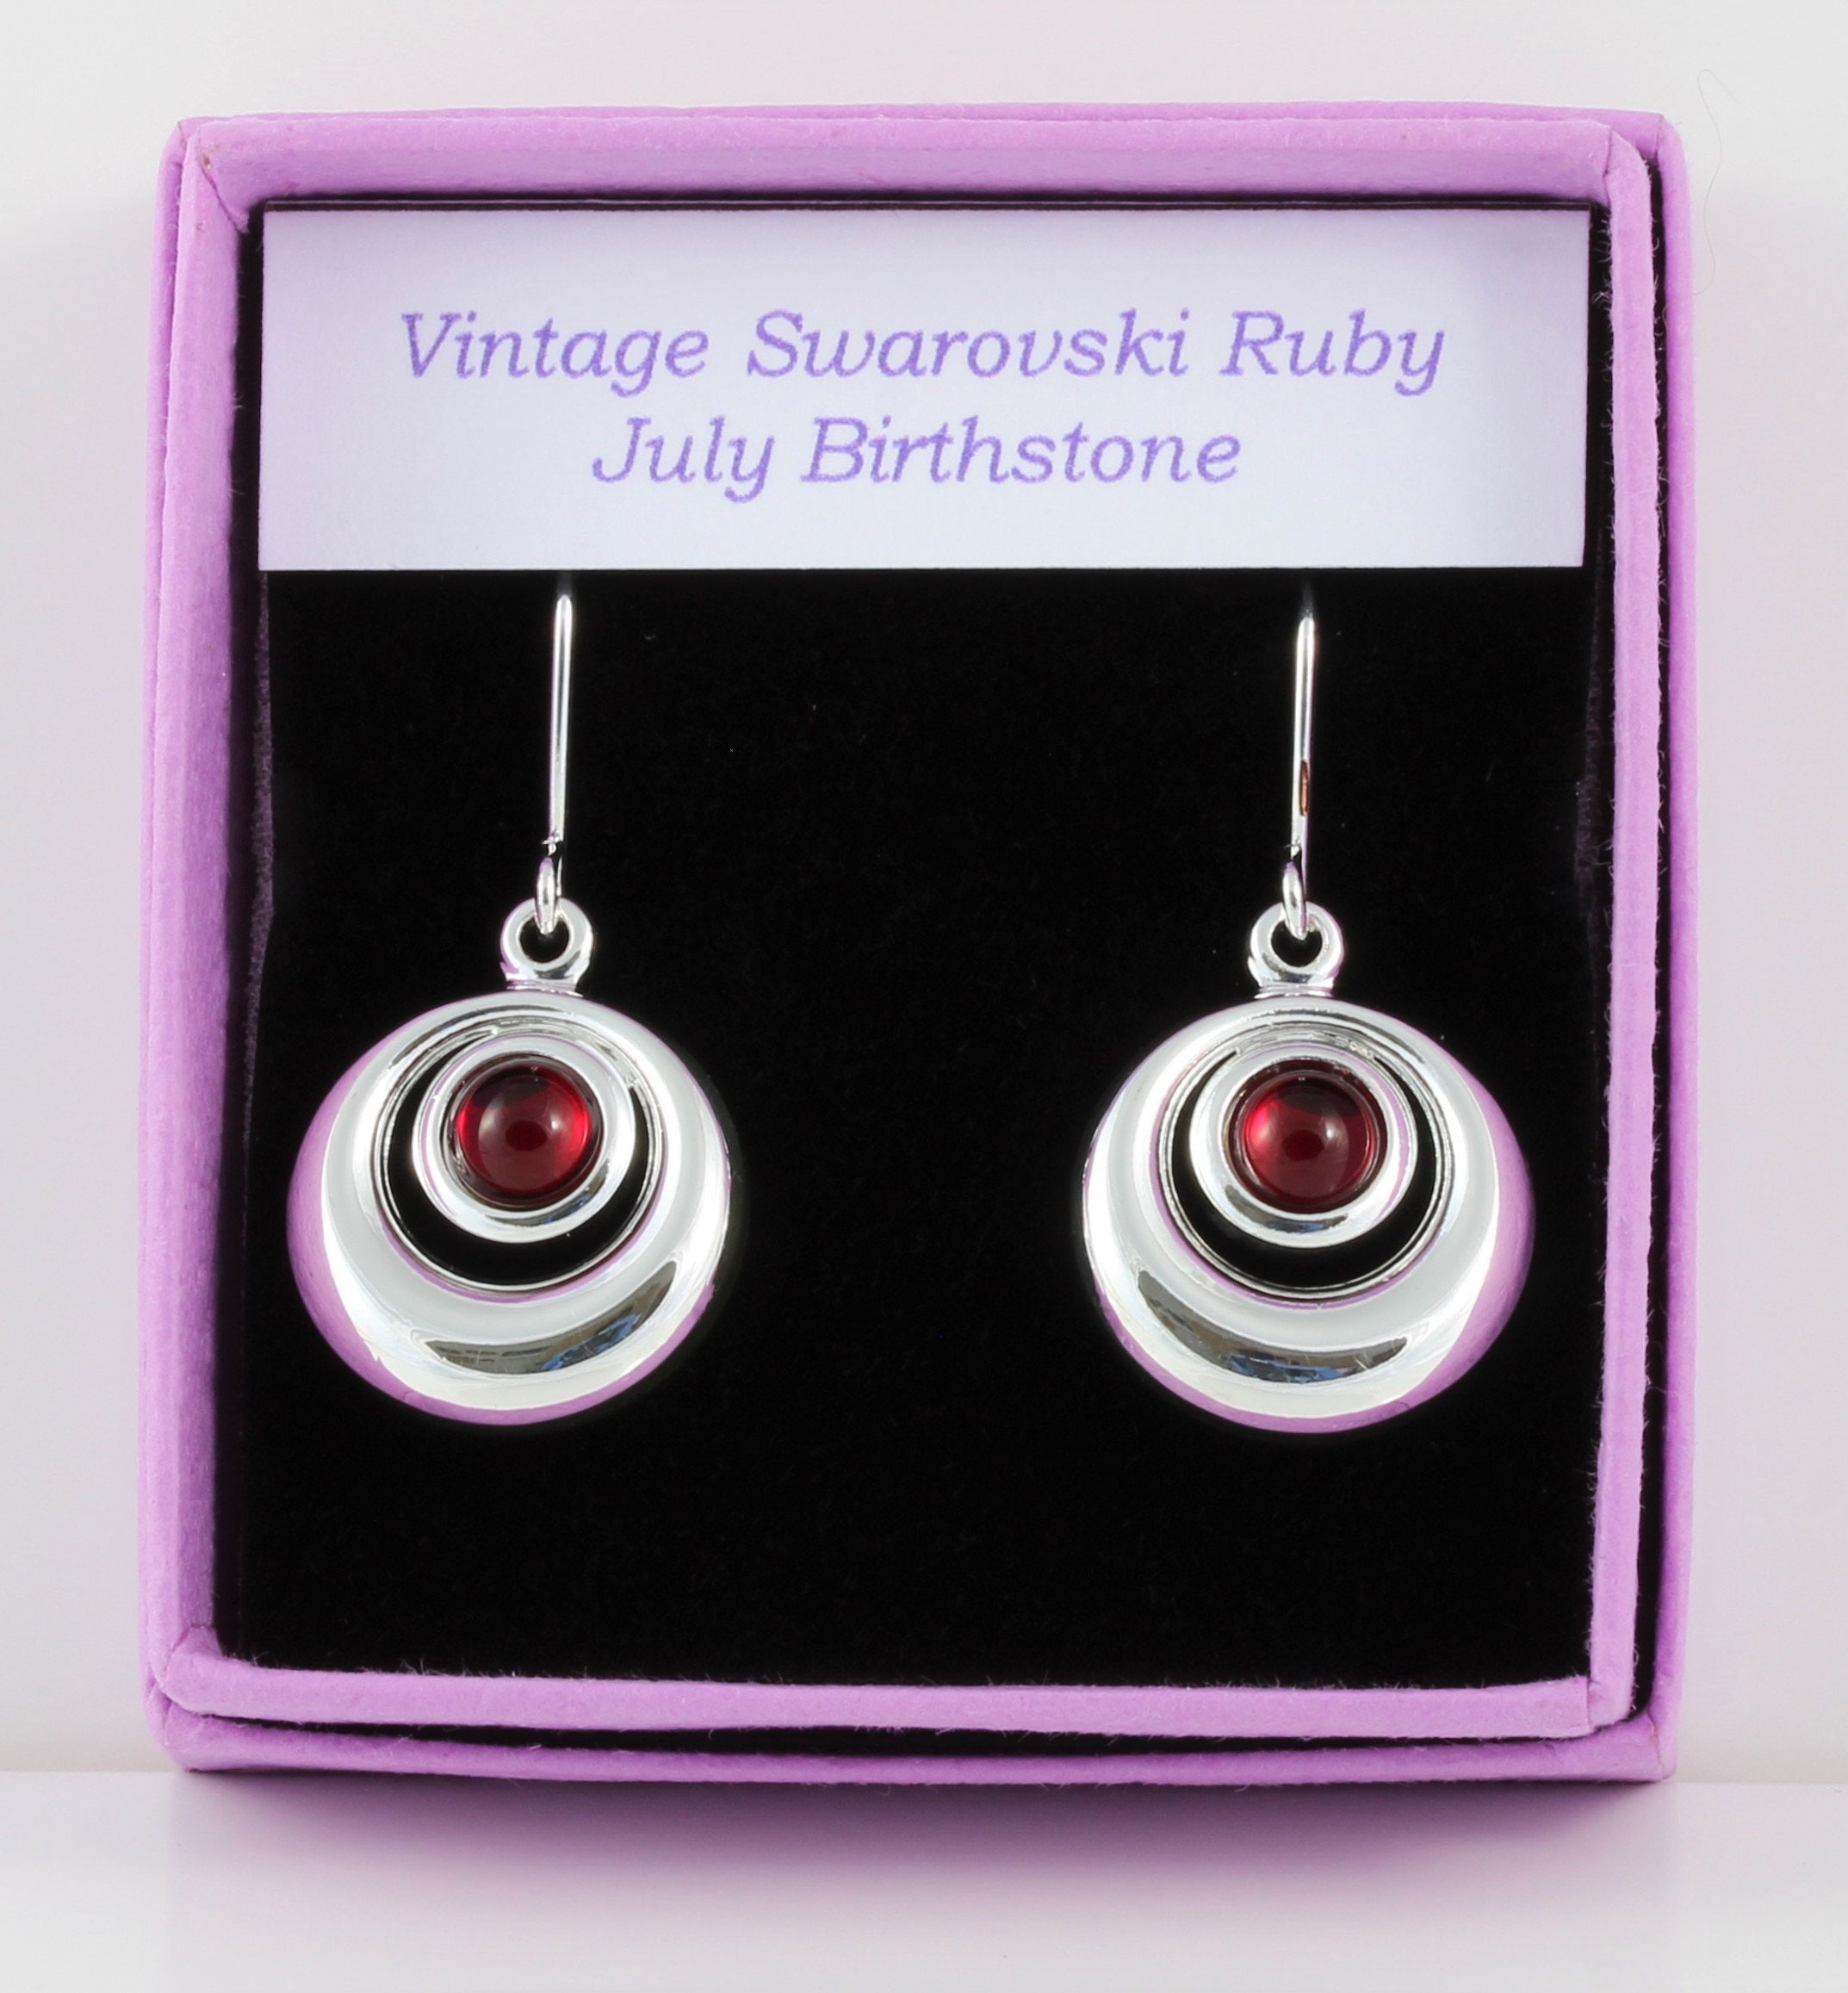 July Birthstone Vintage Swarovski Ruby Crystal Circular Cabochon Drop Earrings